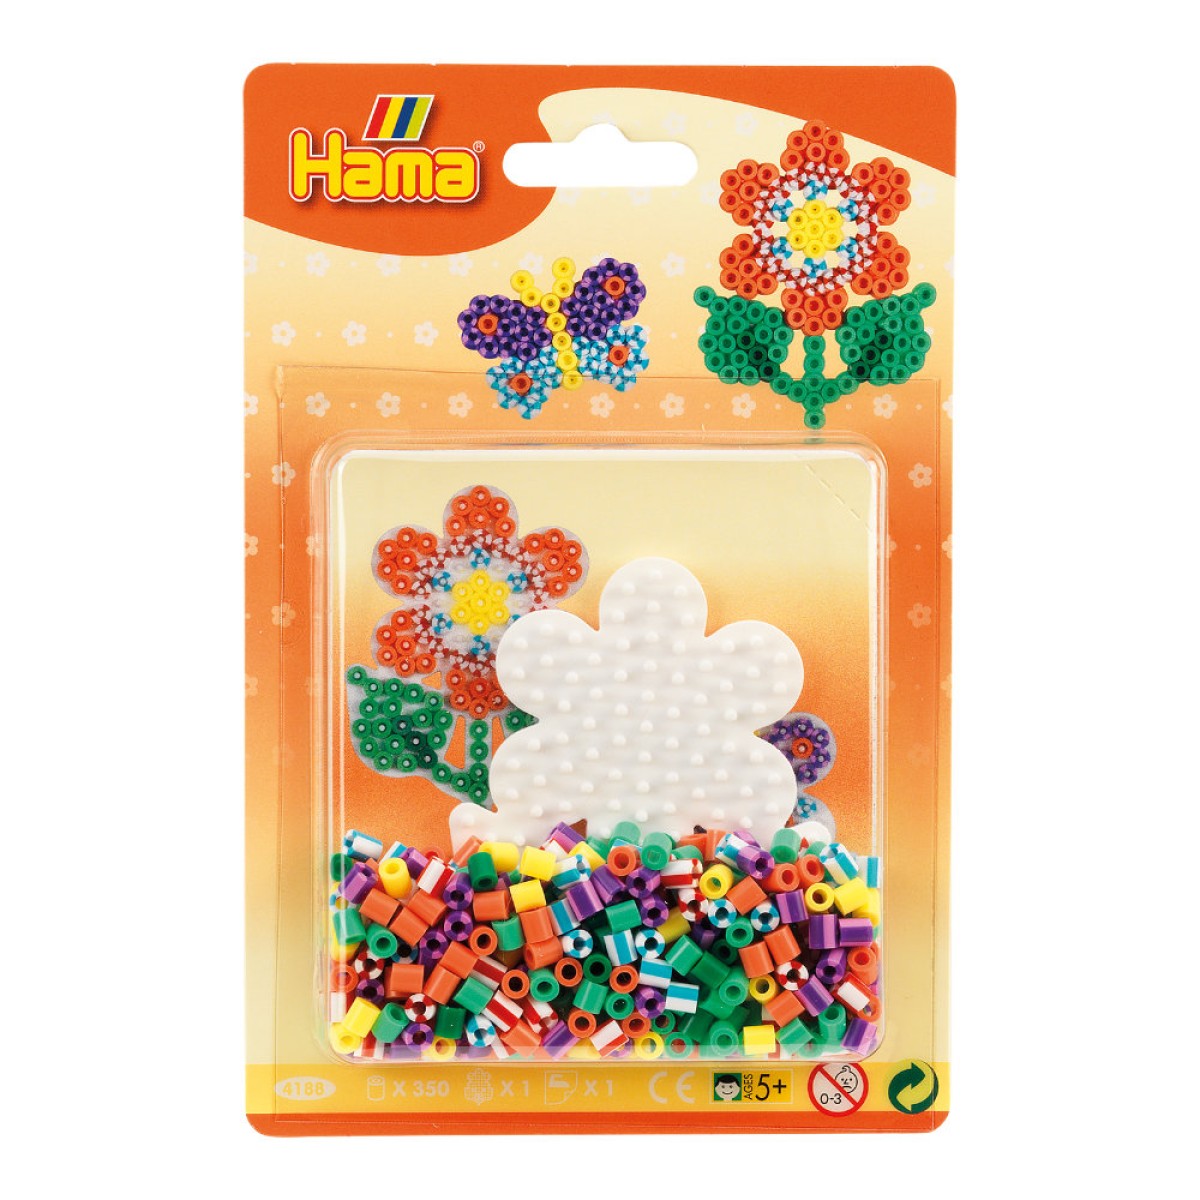 Hama Beads Small Flower Blister Pack - Bright Star Toys